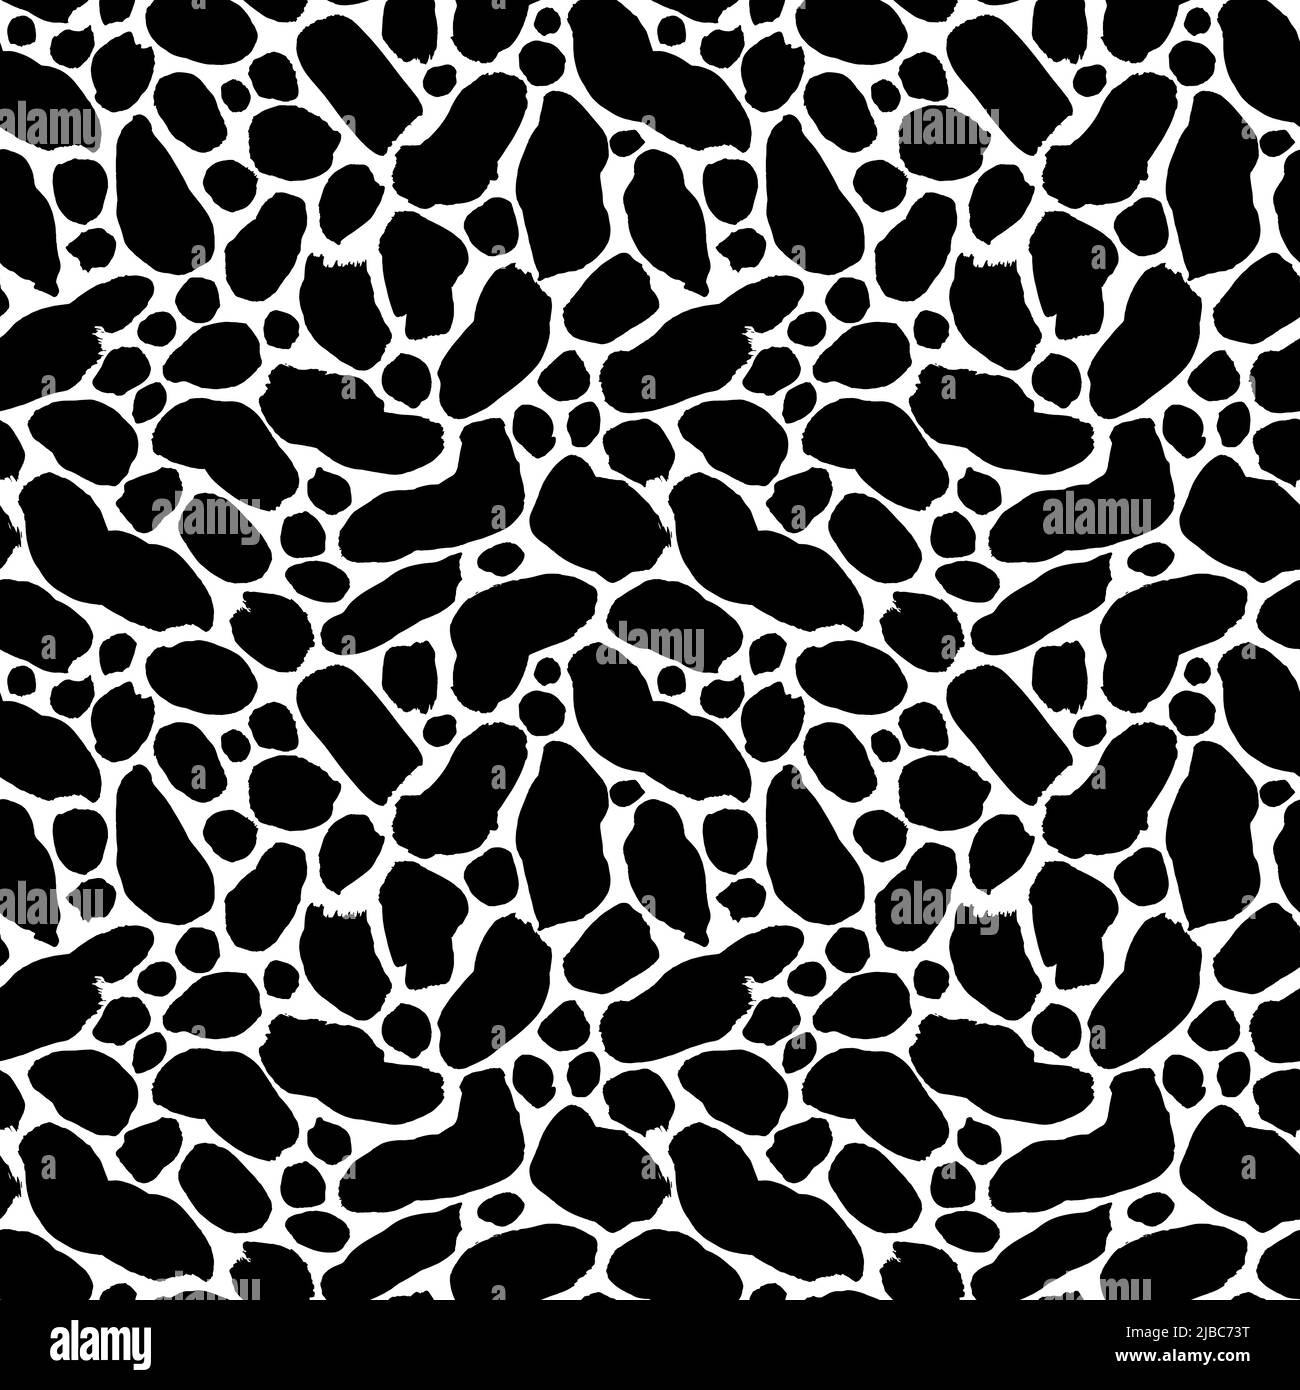 Black uneven specks, ink blobs seamless pattern. Stock Vector